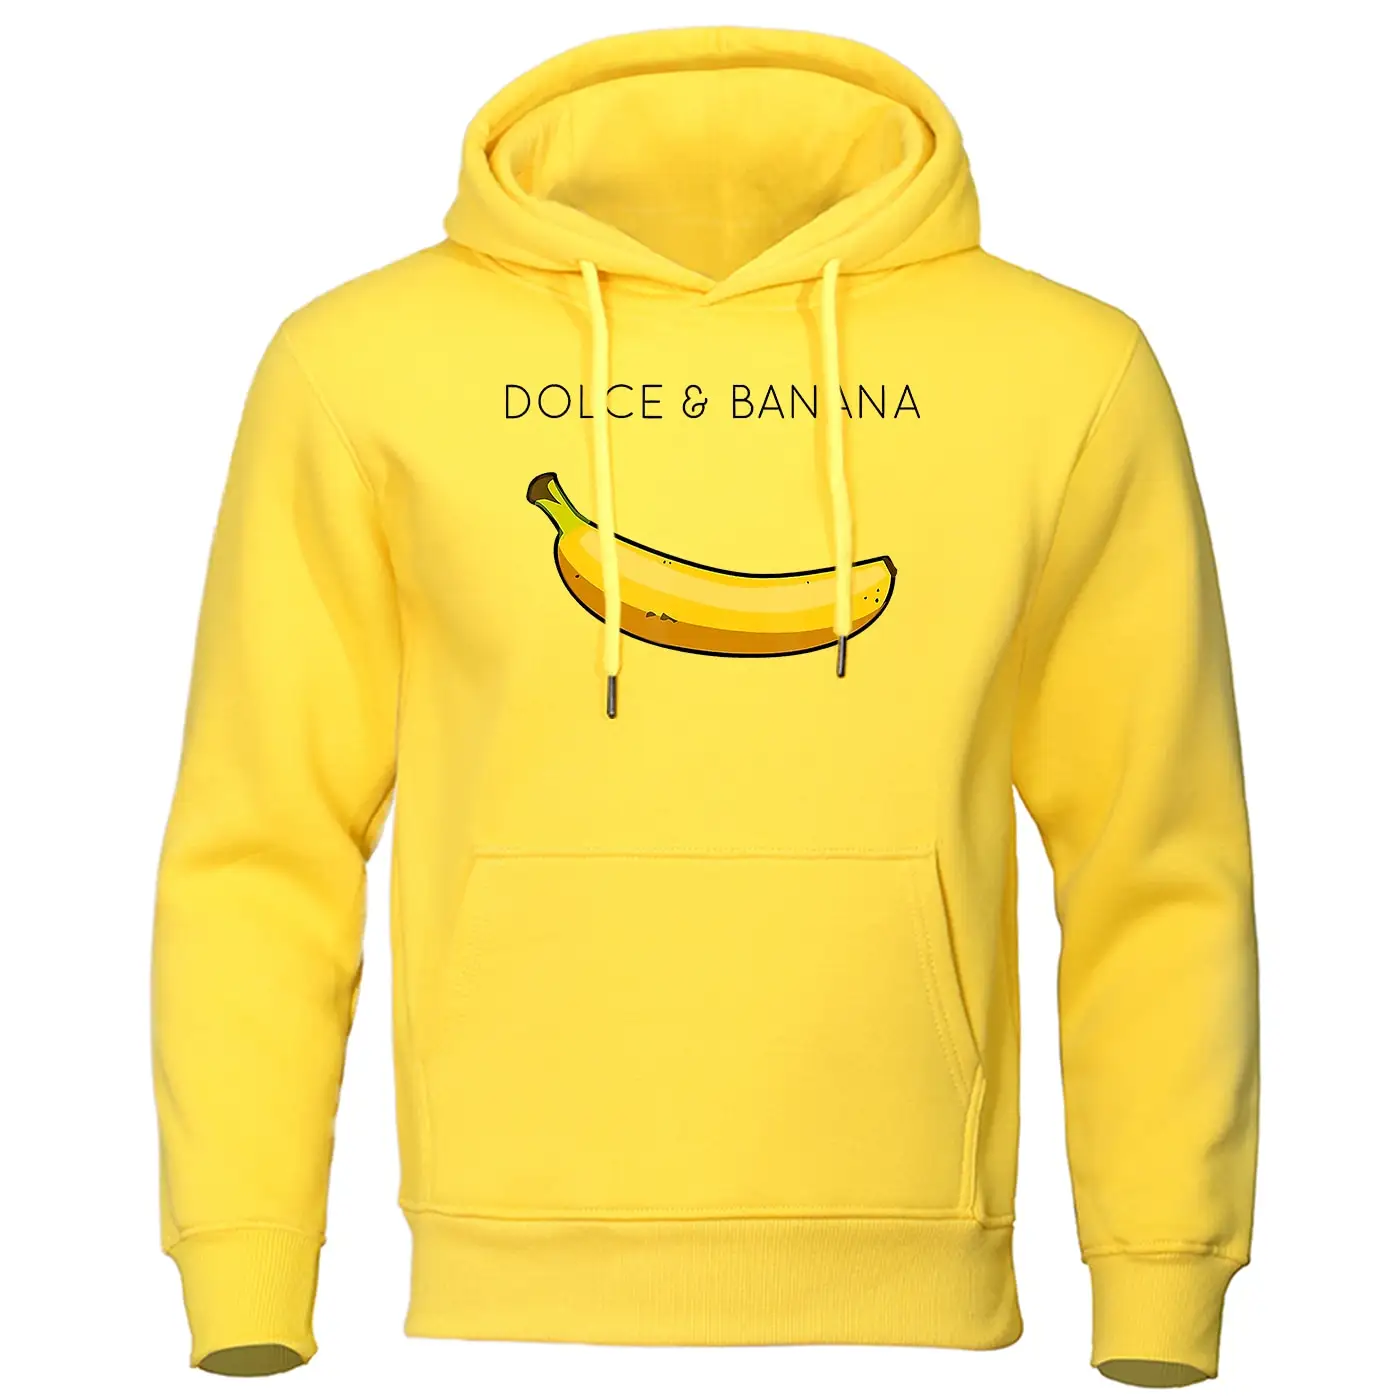 Dolce & Banana Printing Men's Sweatshirt Fashion Casual Hoodies Autumn Loose Pullover Tops Pocket Fleece warm Sportswear Male